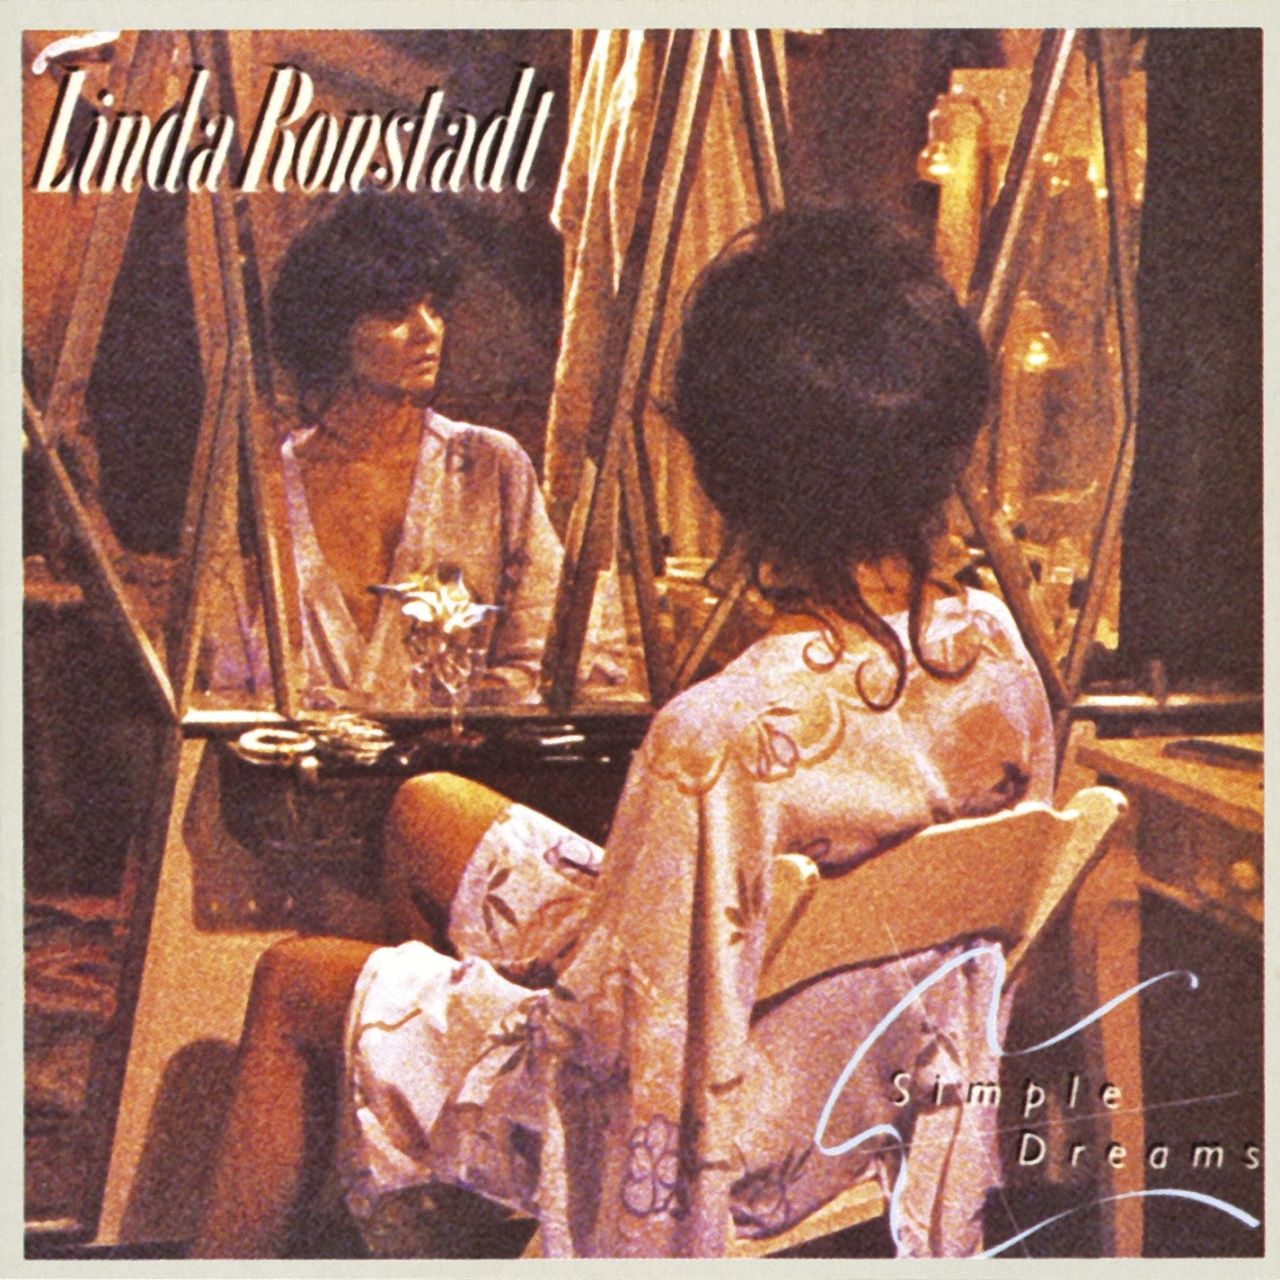 Linda Ronstadt - Simple Dreams cover album